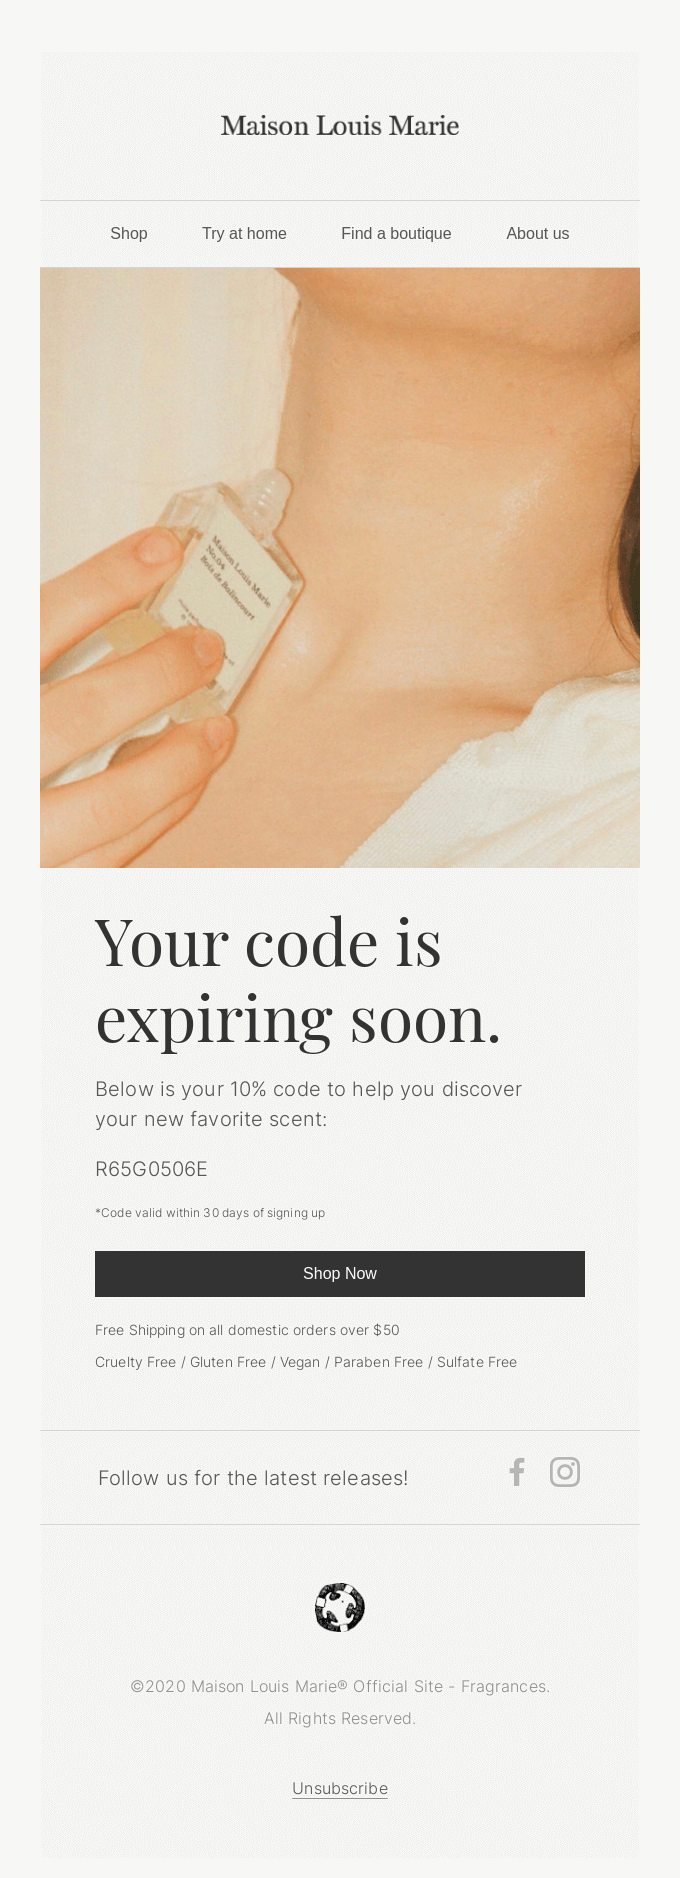 Your code is expiring soon